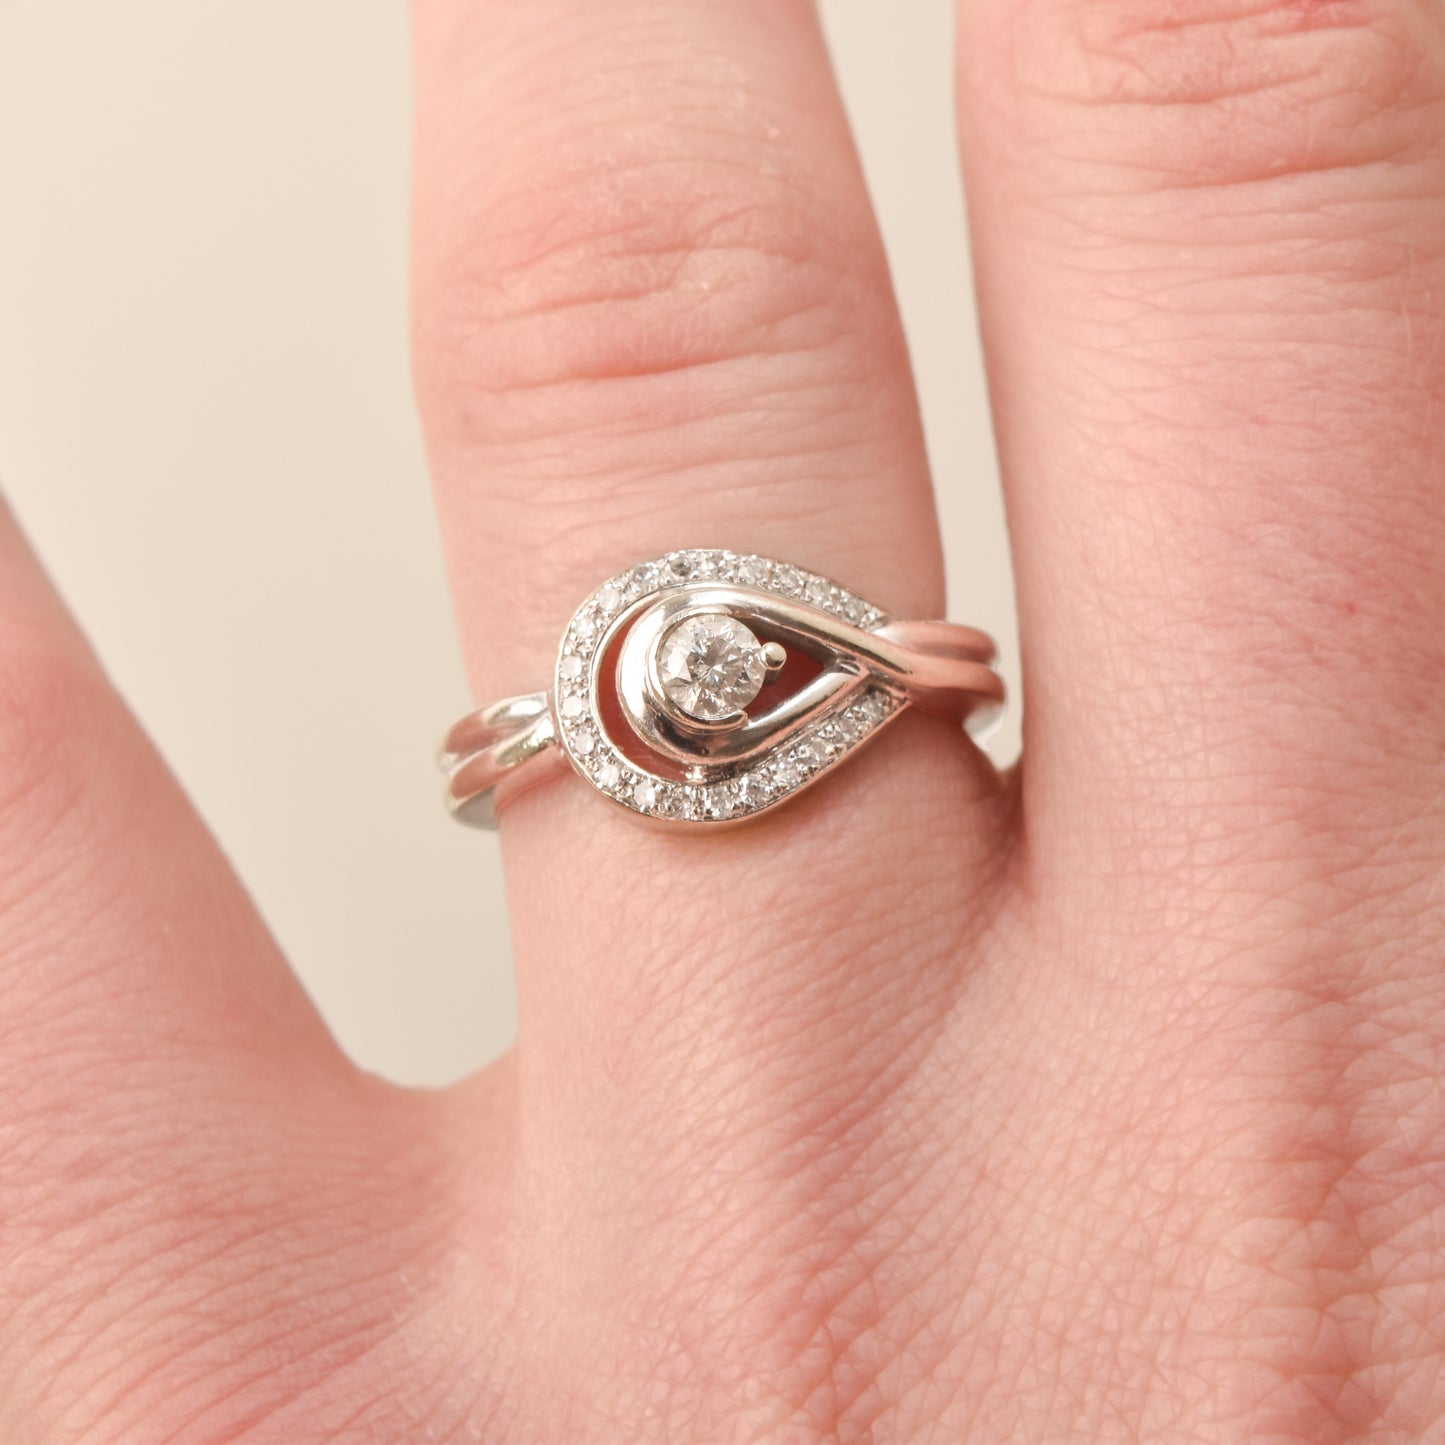 Elegant Estate 10K Diamond Halo Engagement Ring on finger, Size 6 3/4 US, against a neutral background.